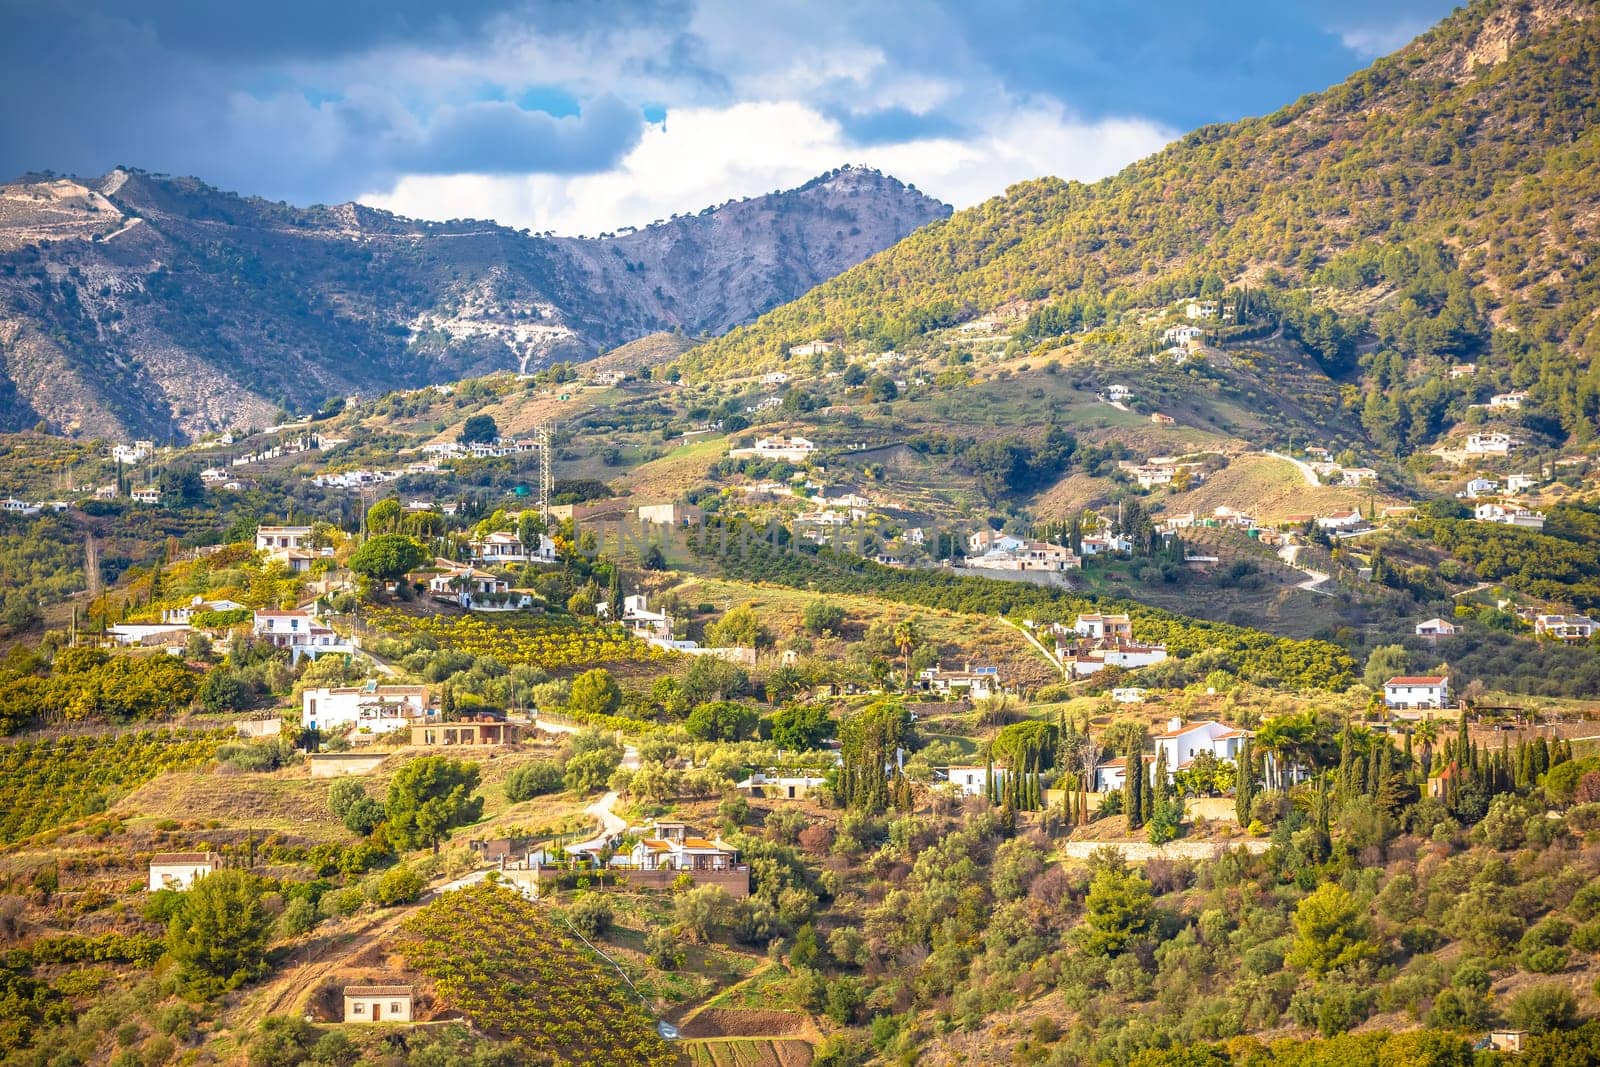 Frigiliana background mountain landscape villas view, Andalusia region of Spain